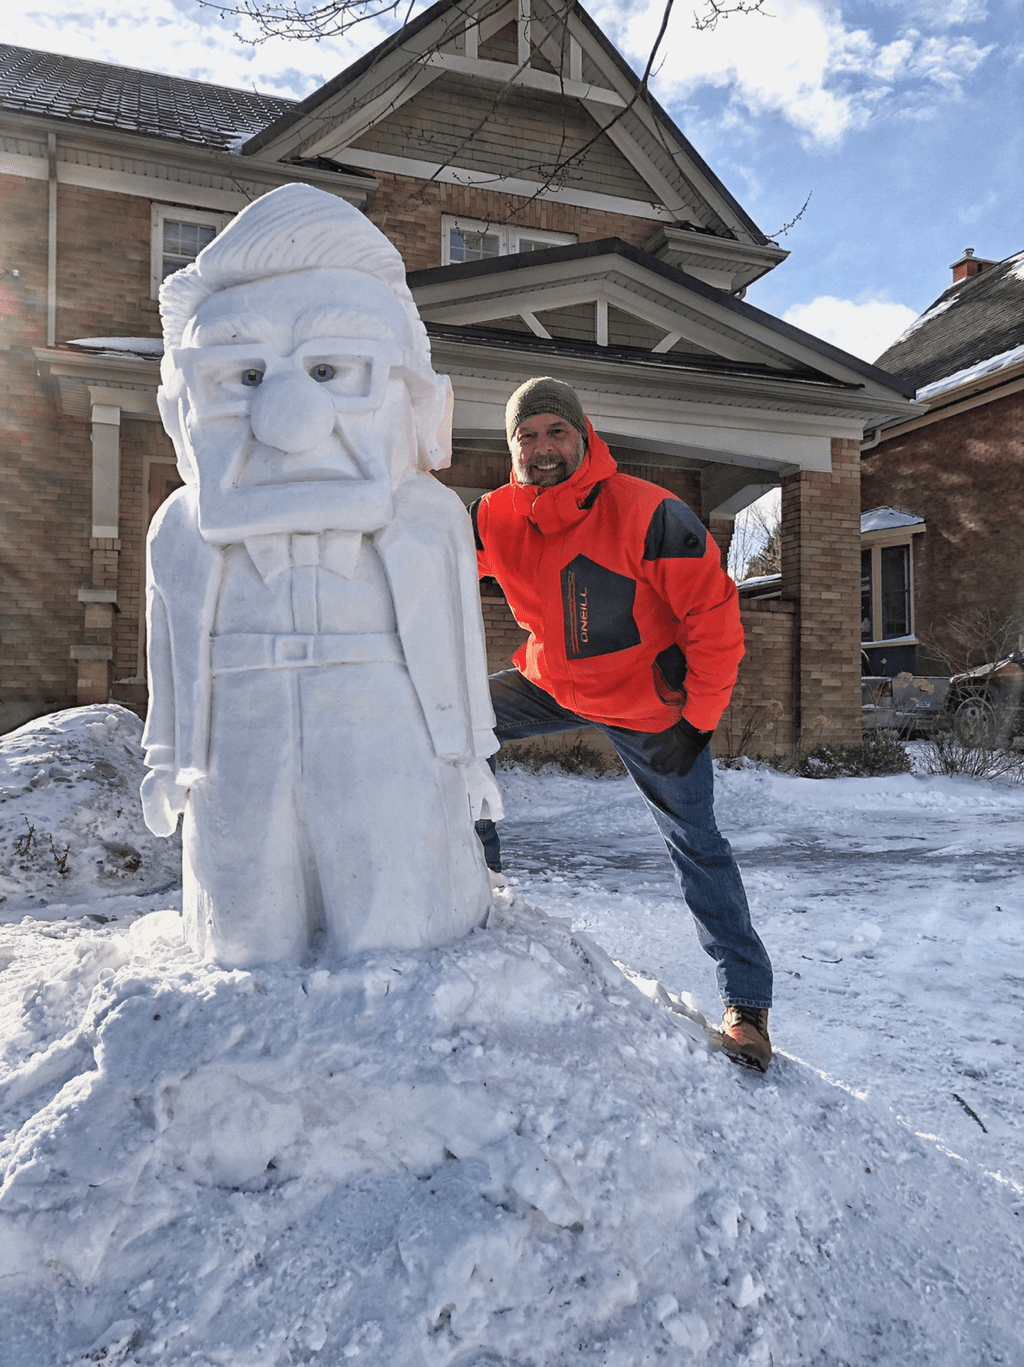 the snow sculptor Matt Morris with one of his impressive ice sculptors